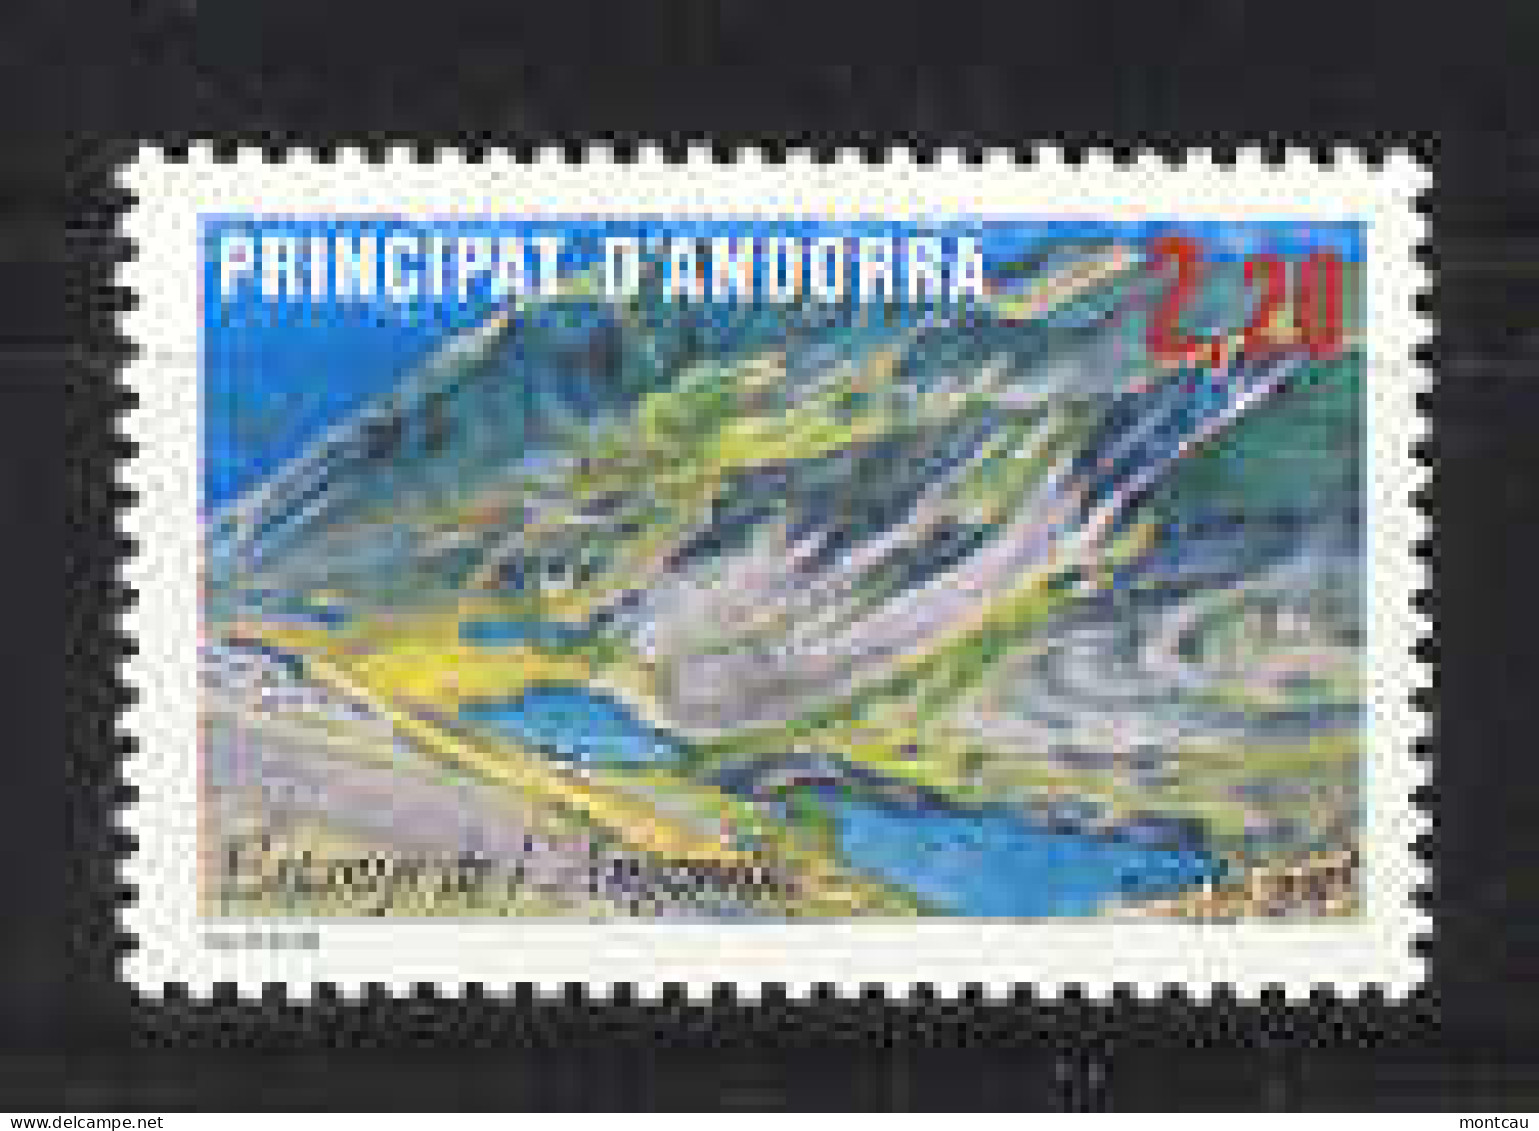 Andorra -Franc 1986 Lago De Angonella Y=351 E=372 (**) - Ungebraucht